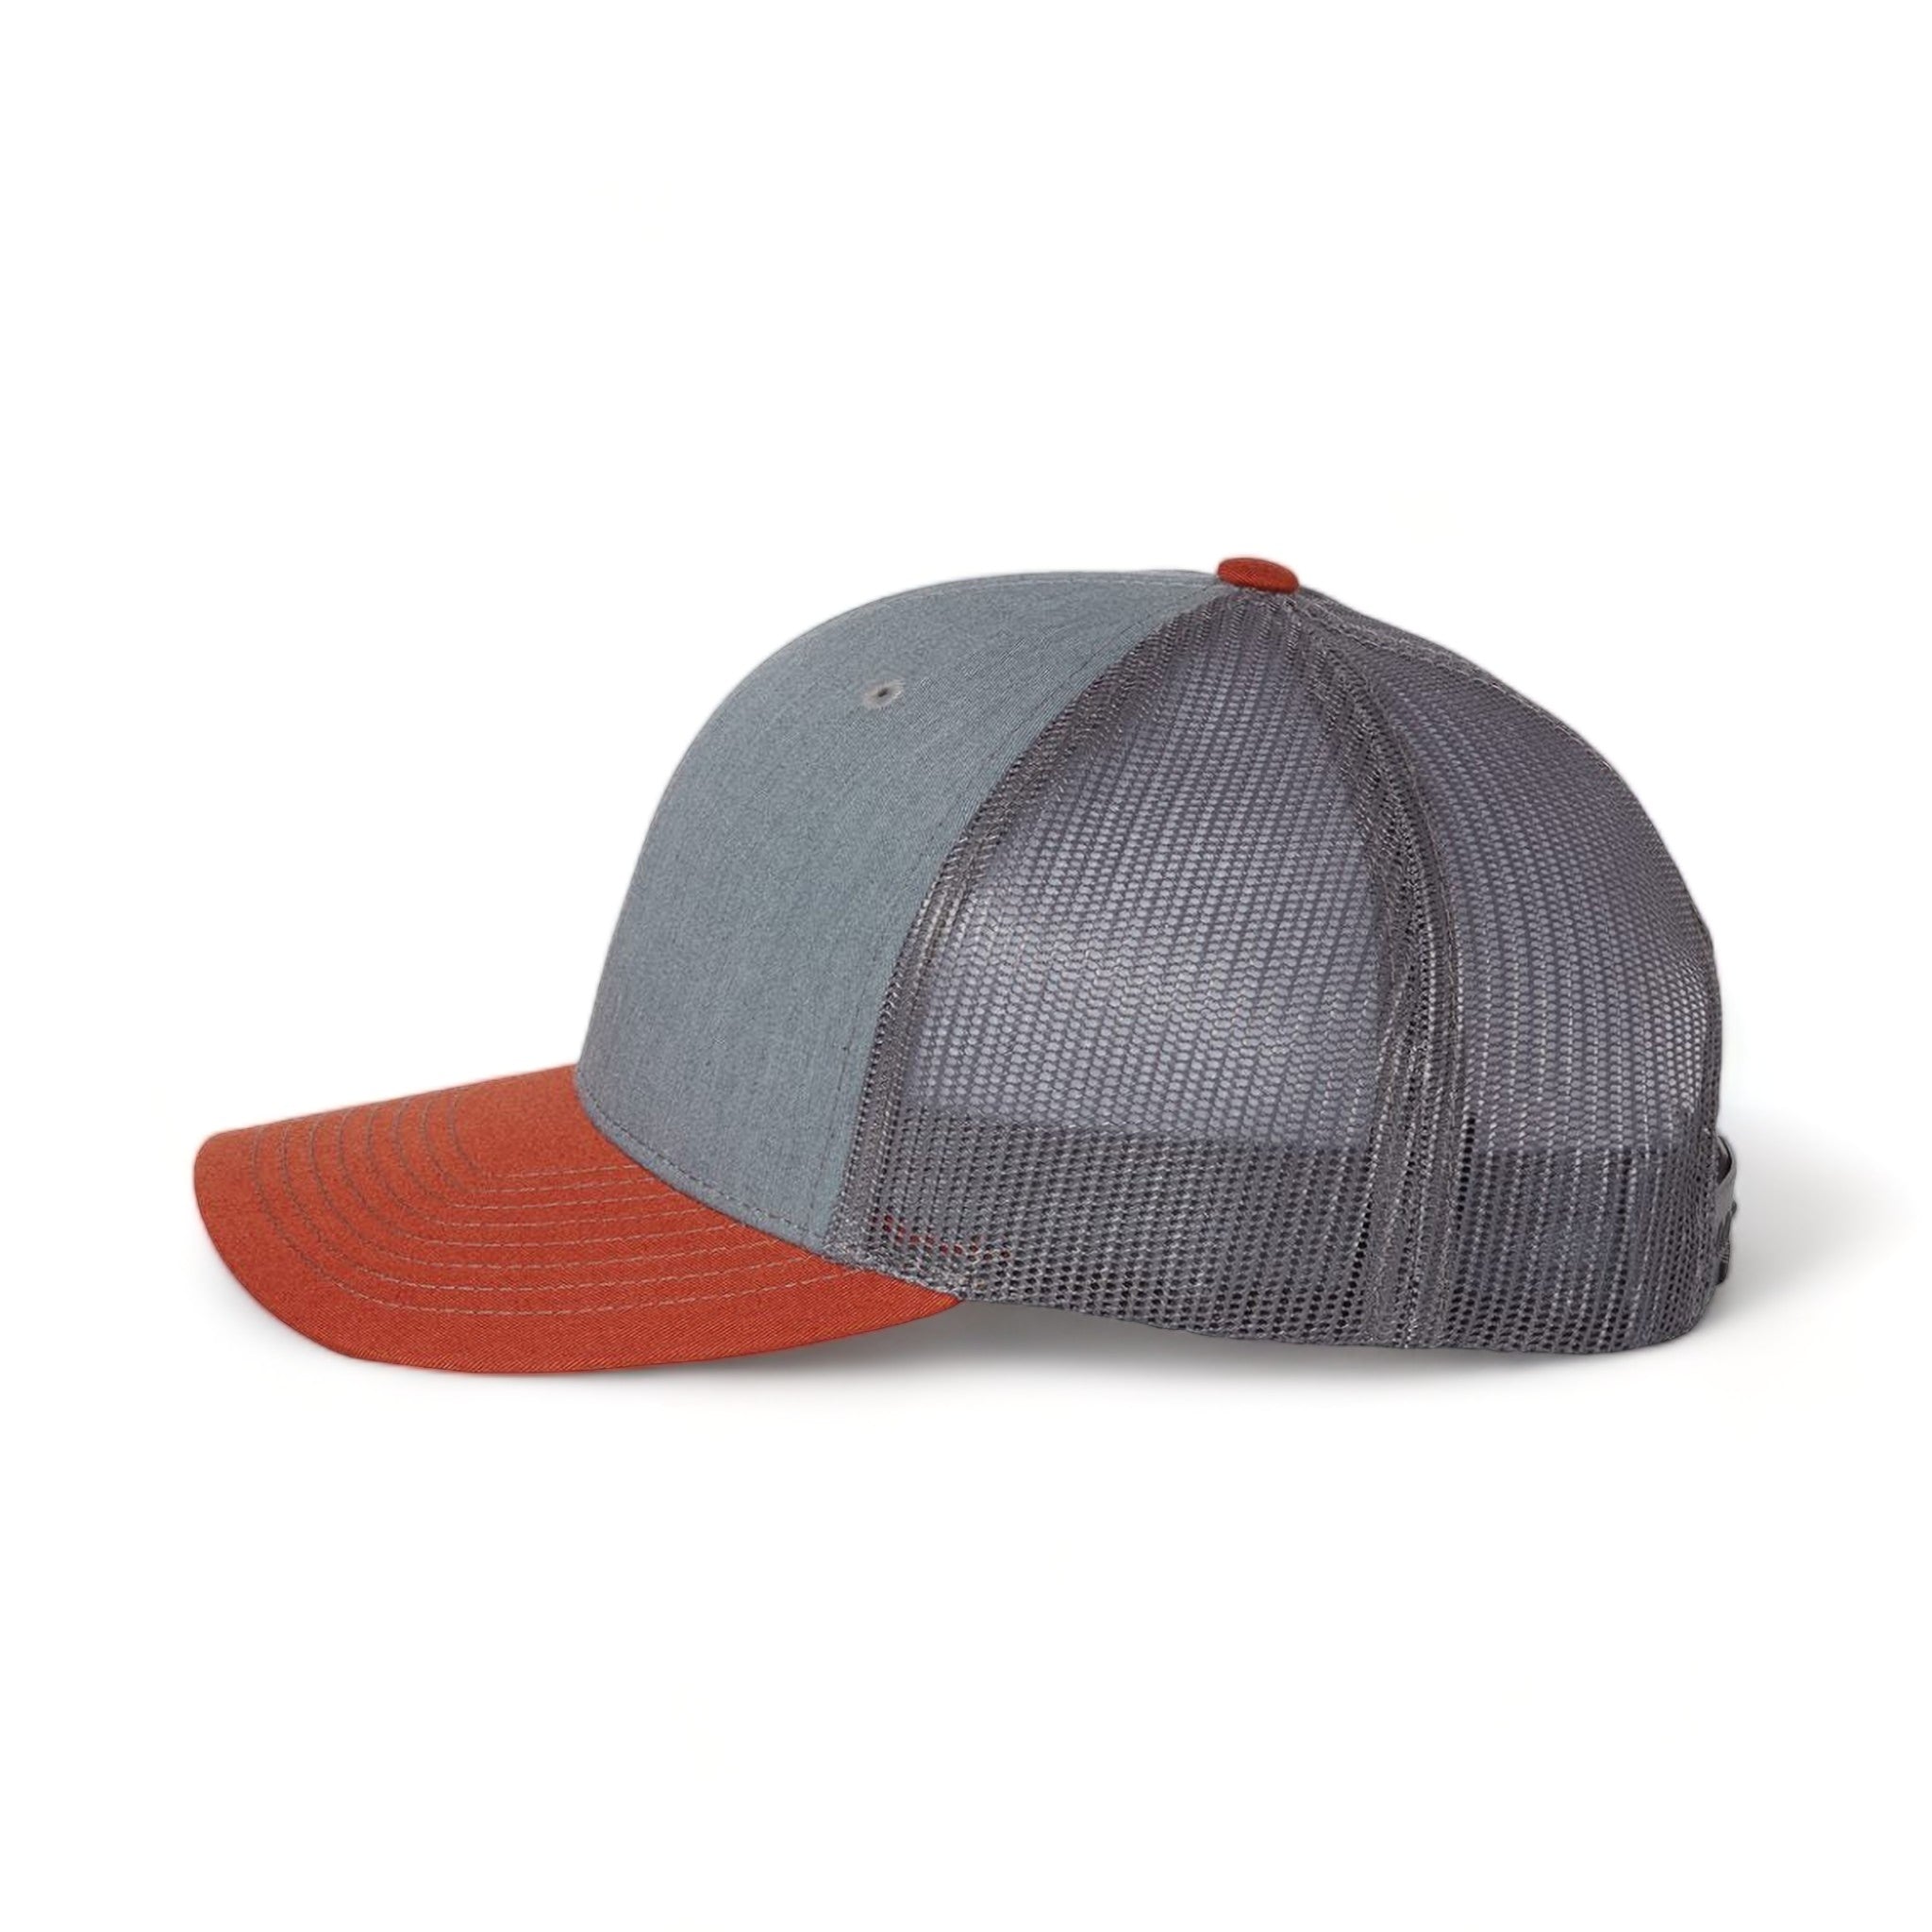 Side view of Richardson 112 custom hat in heather grey, charcoal and dark orange